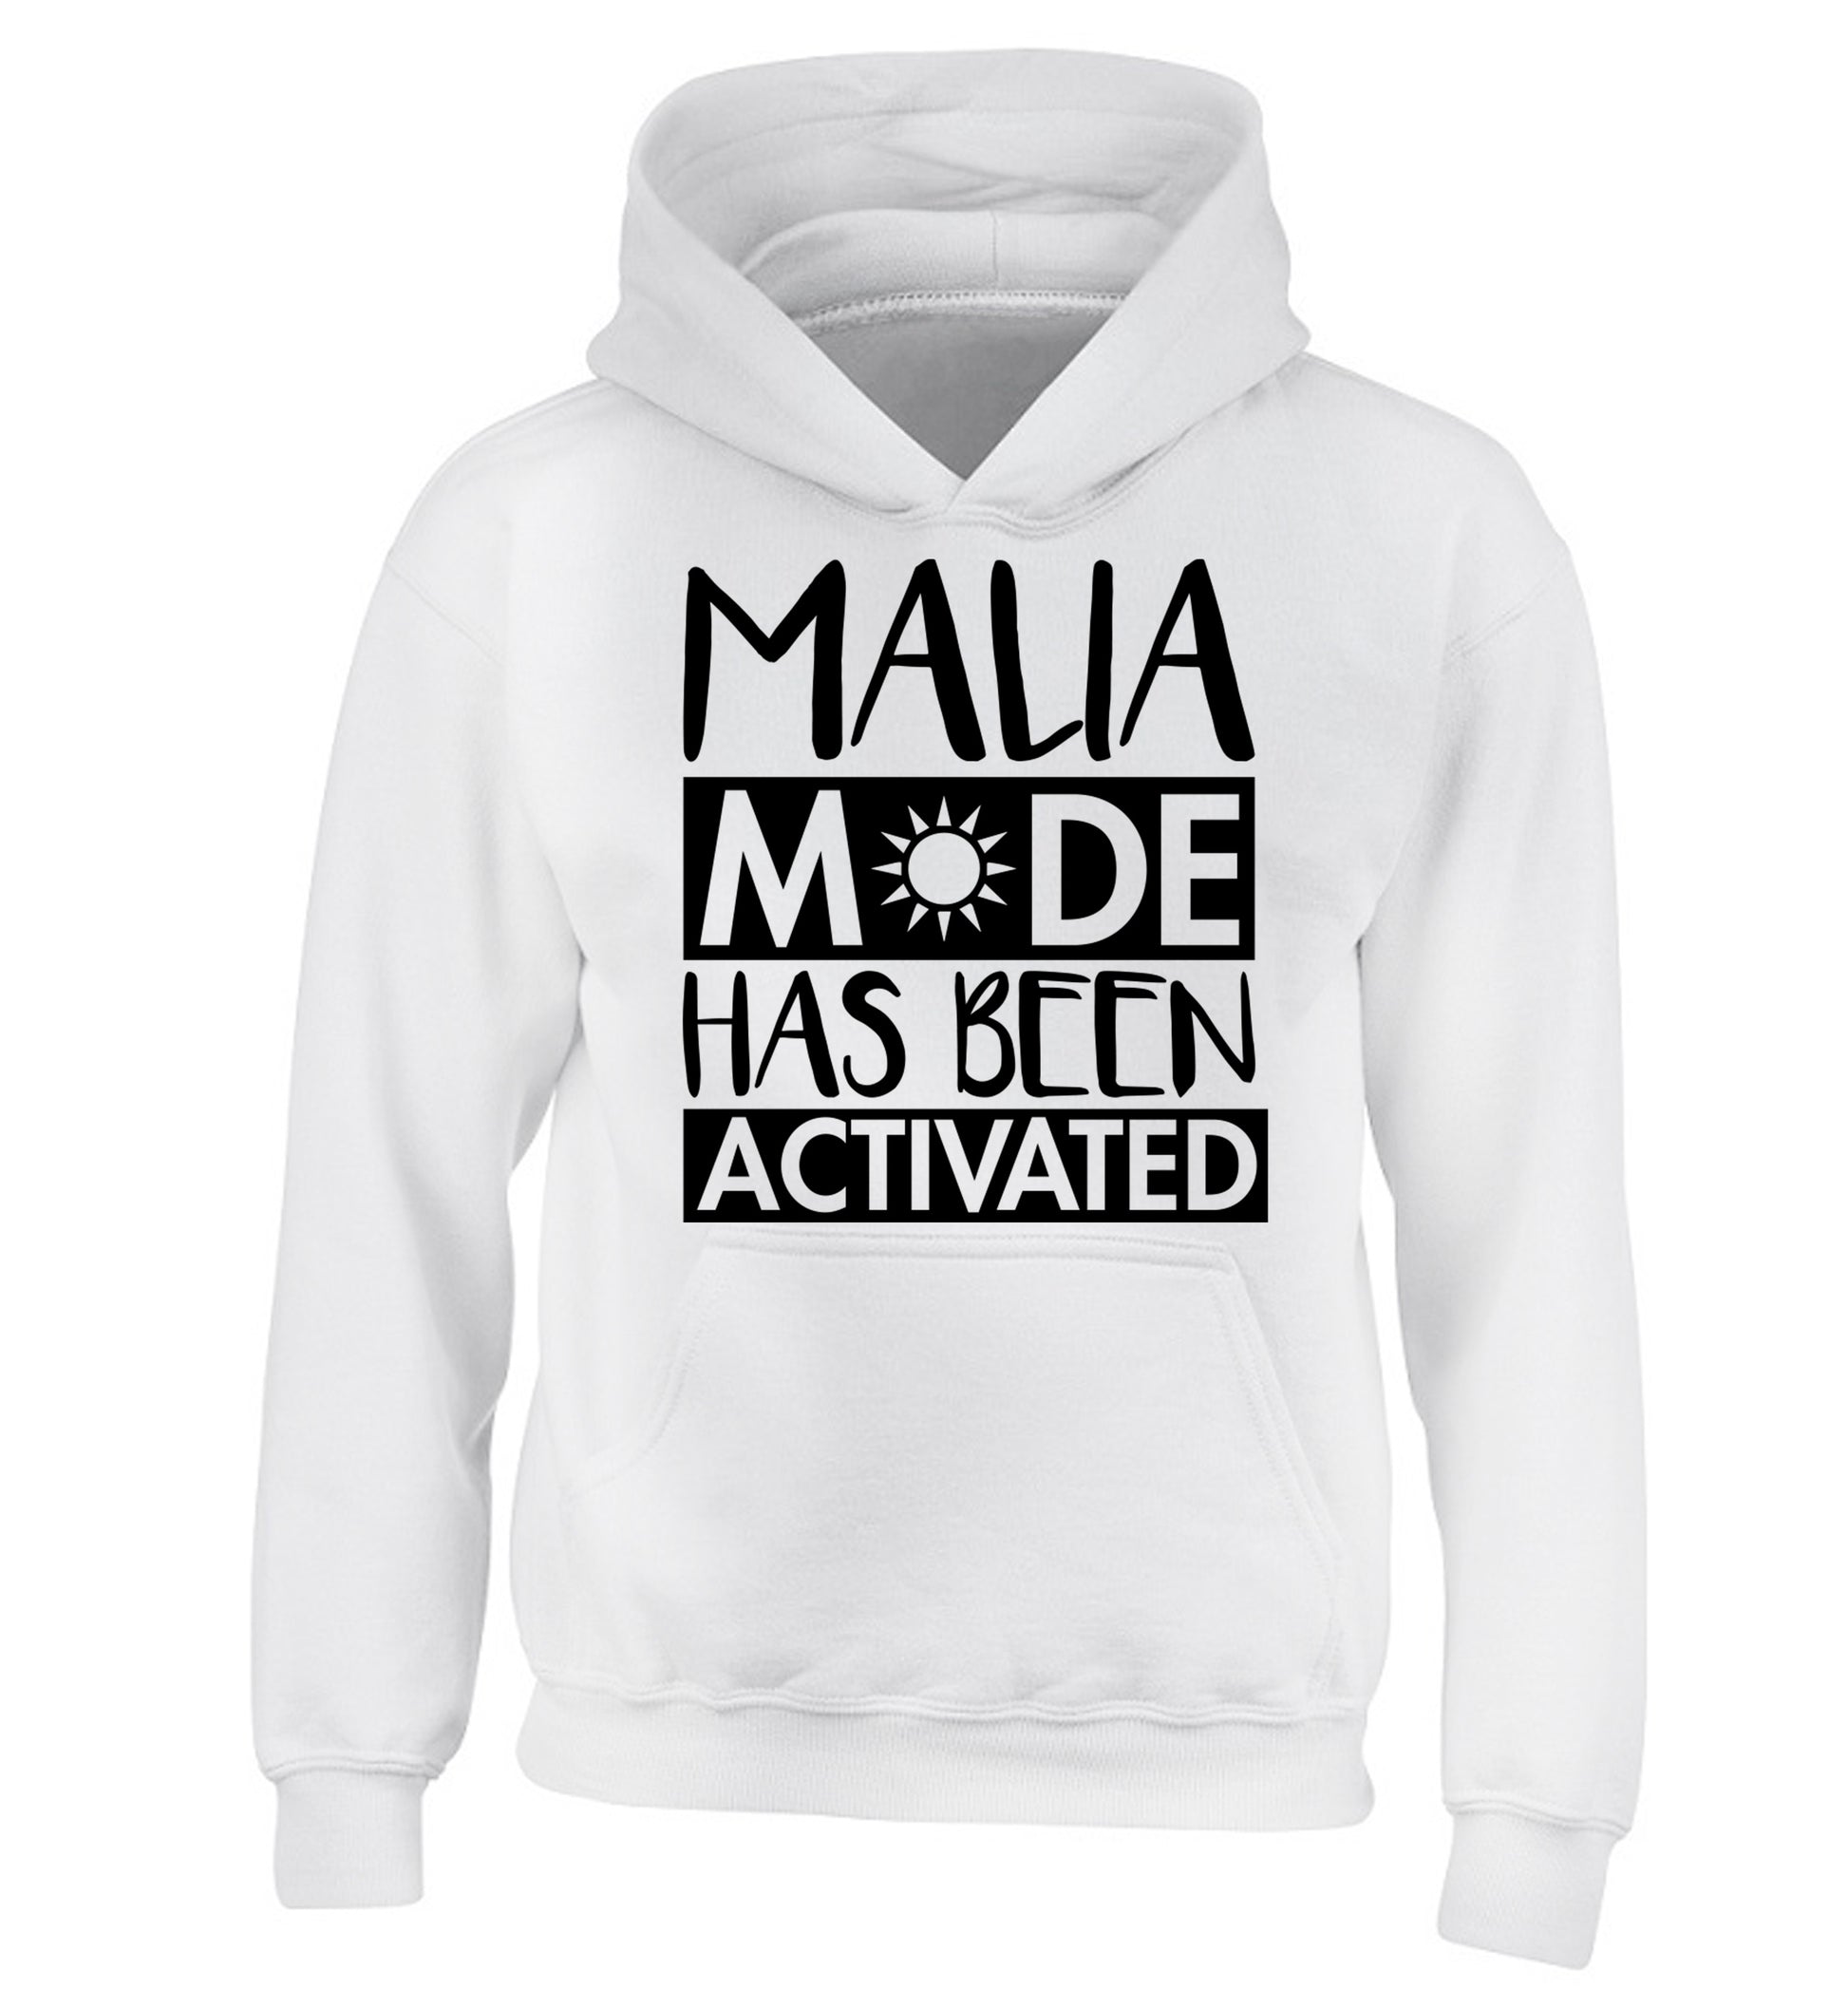 Malia mode has been activated children's white hoodie 12-13 Years